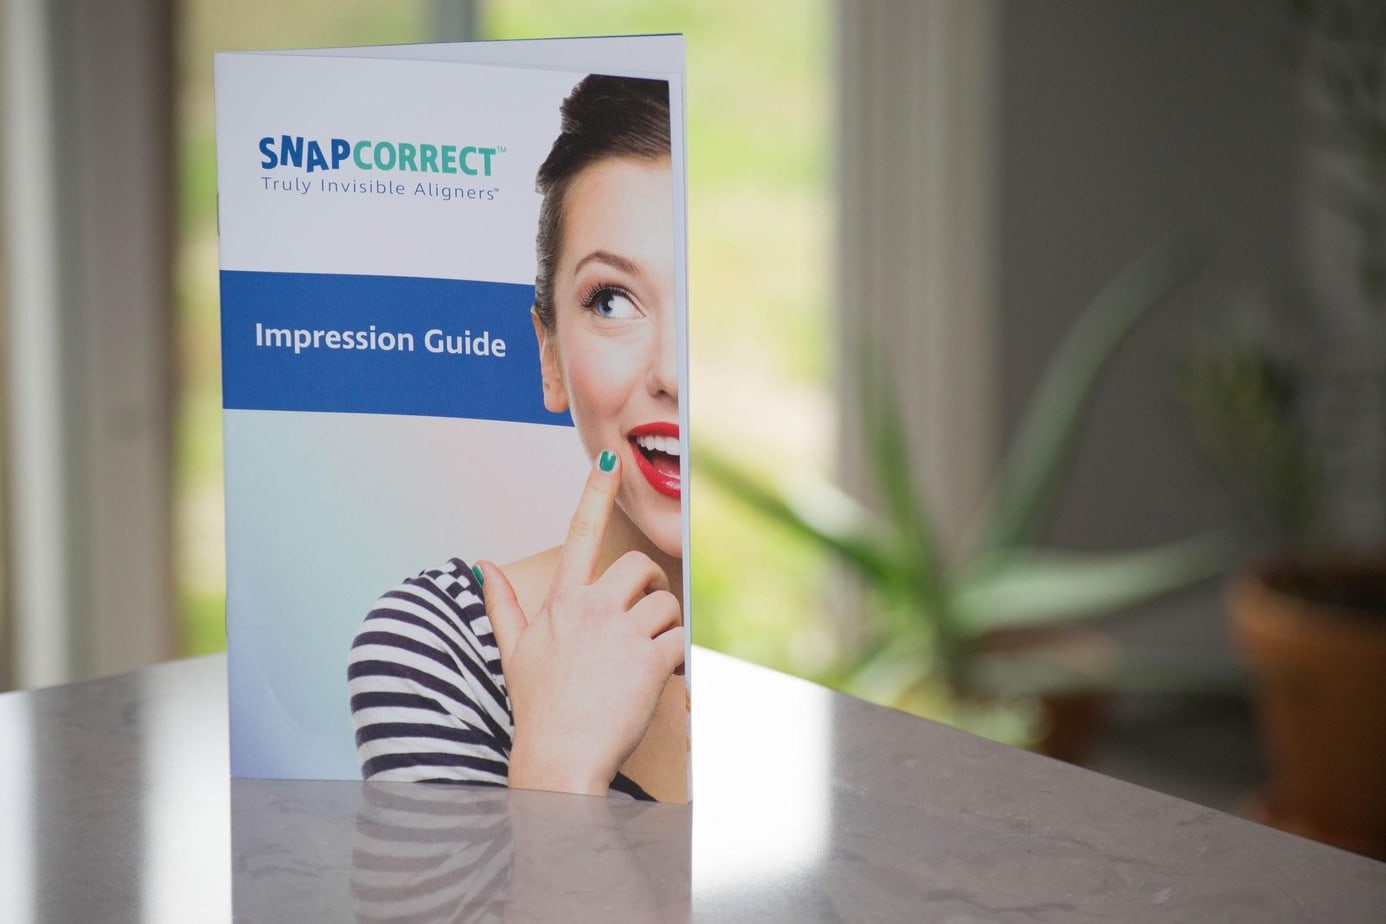 SnapCorrect’s Impression Guide